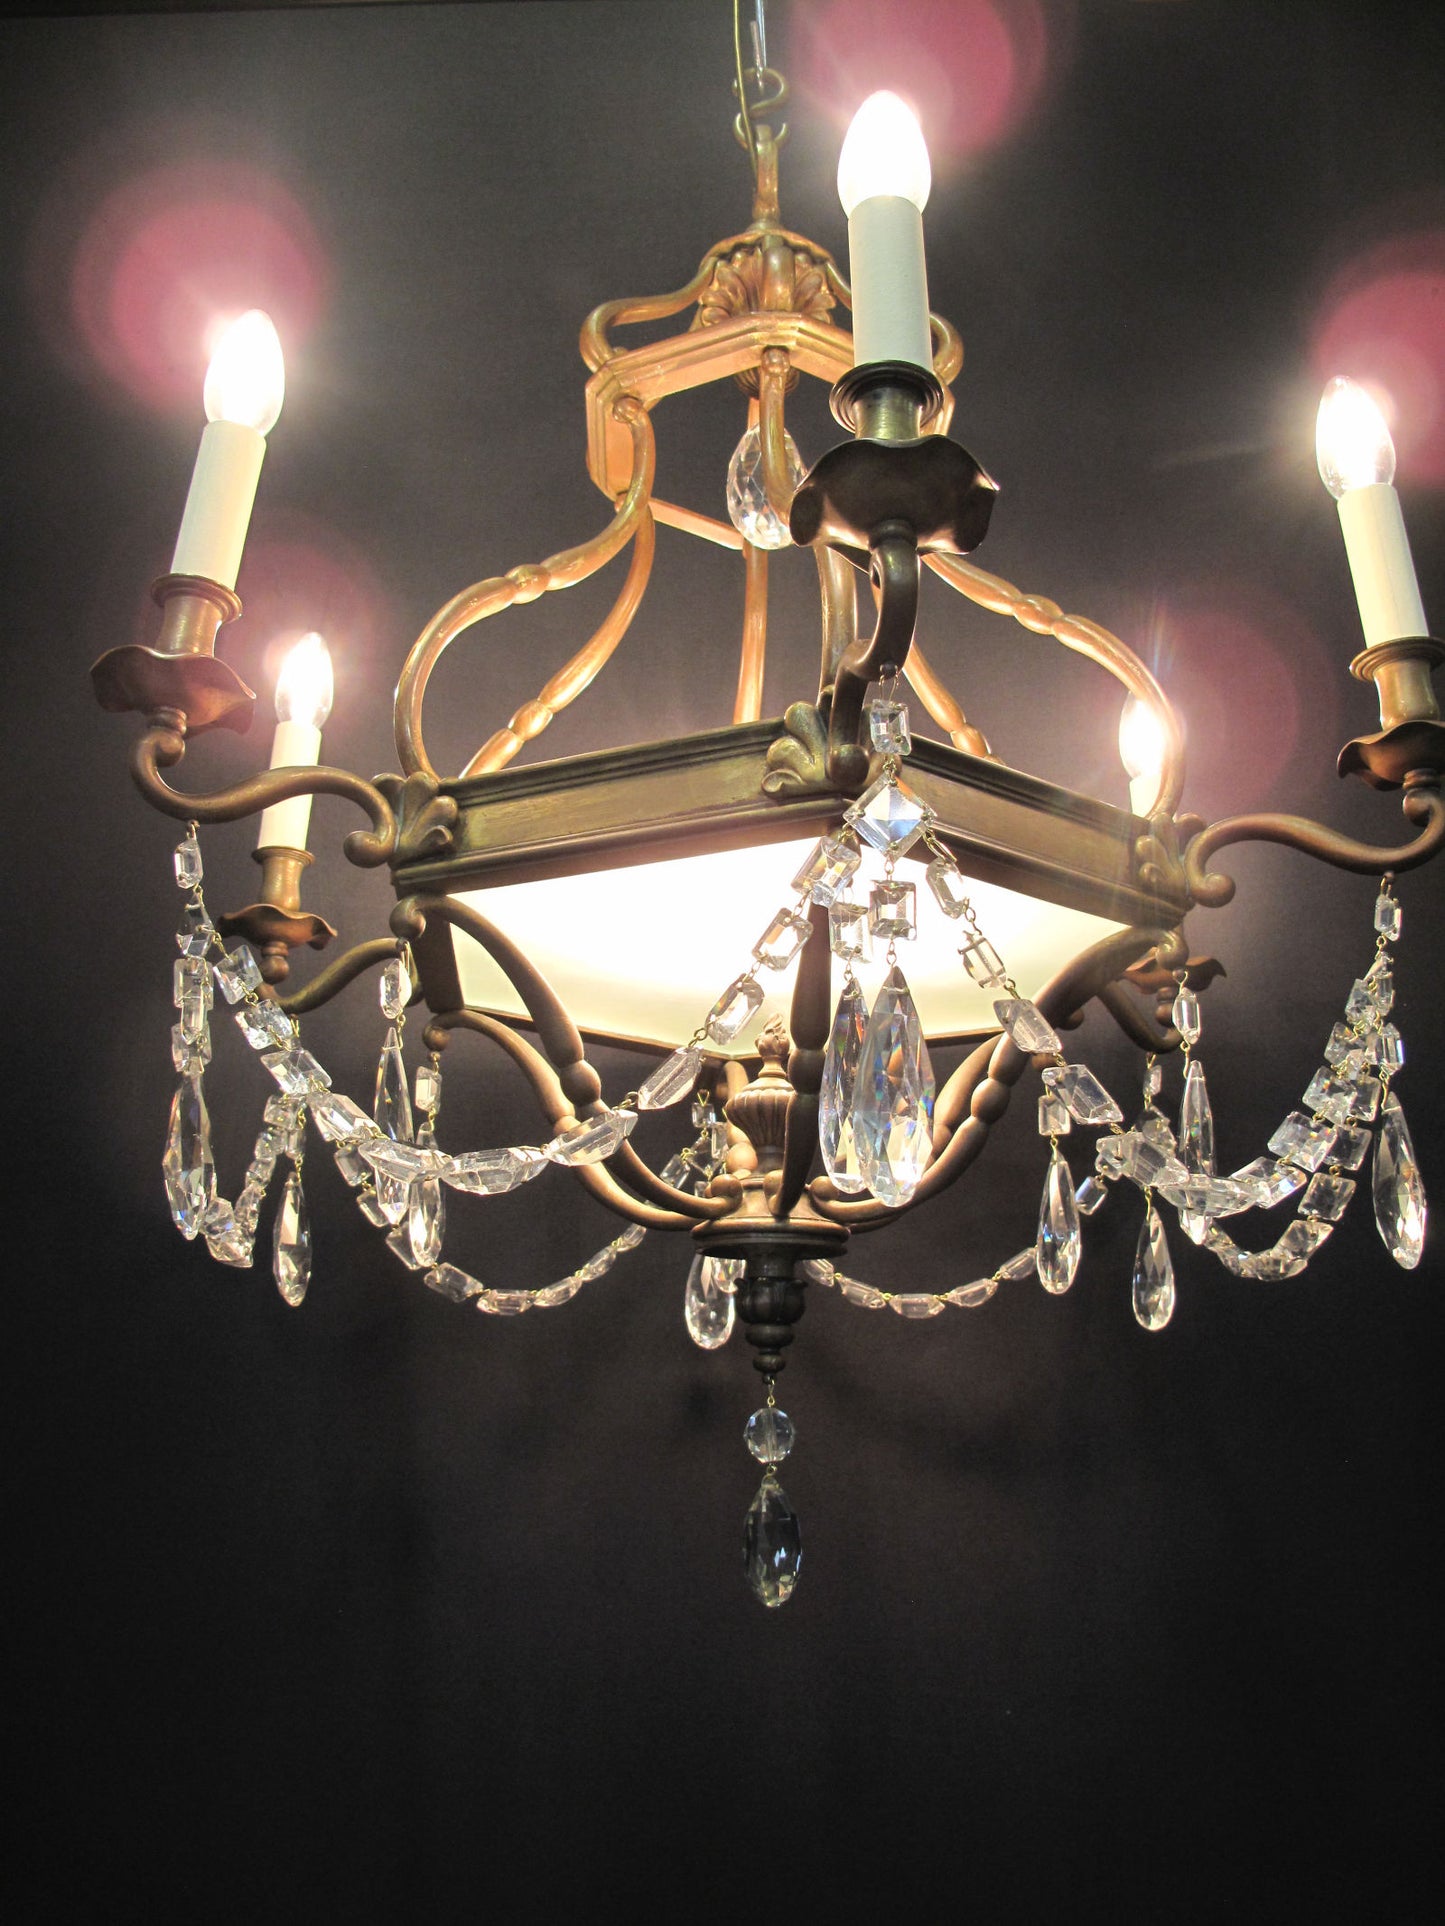 chandelier lit up from below